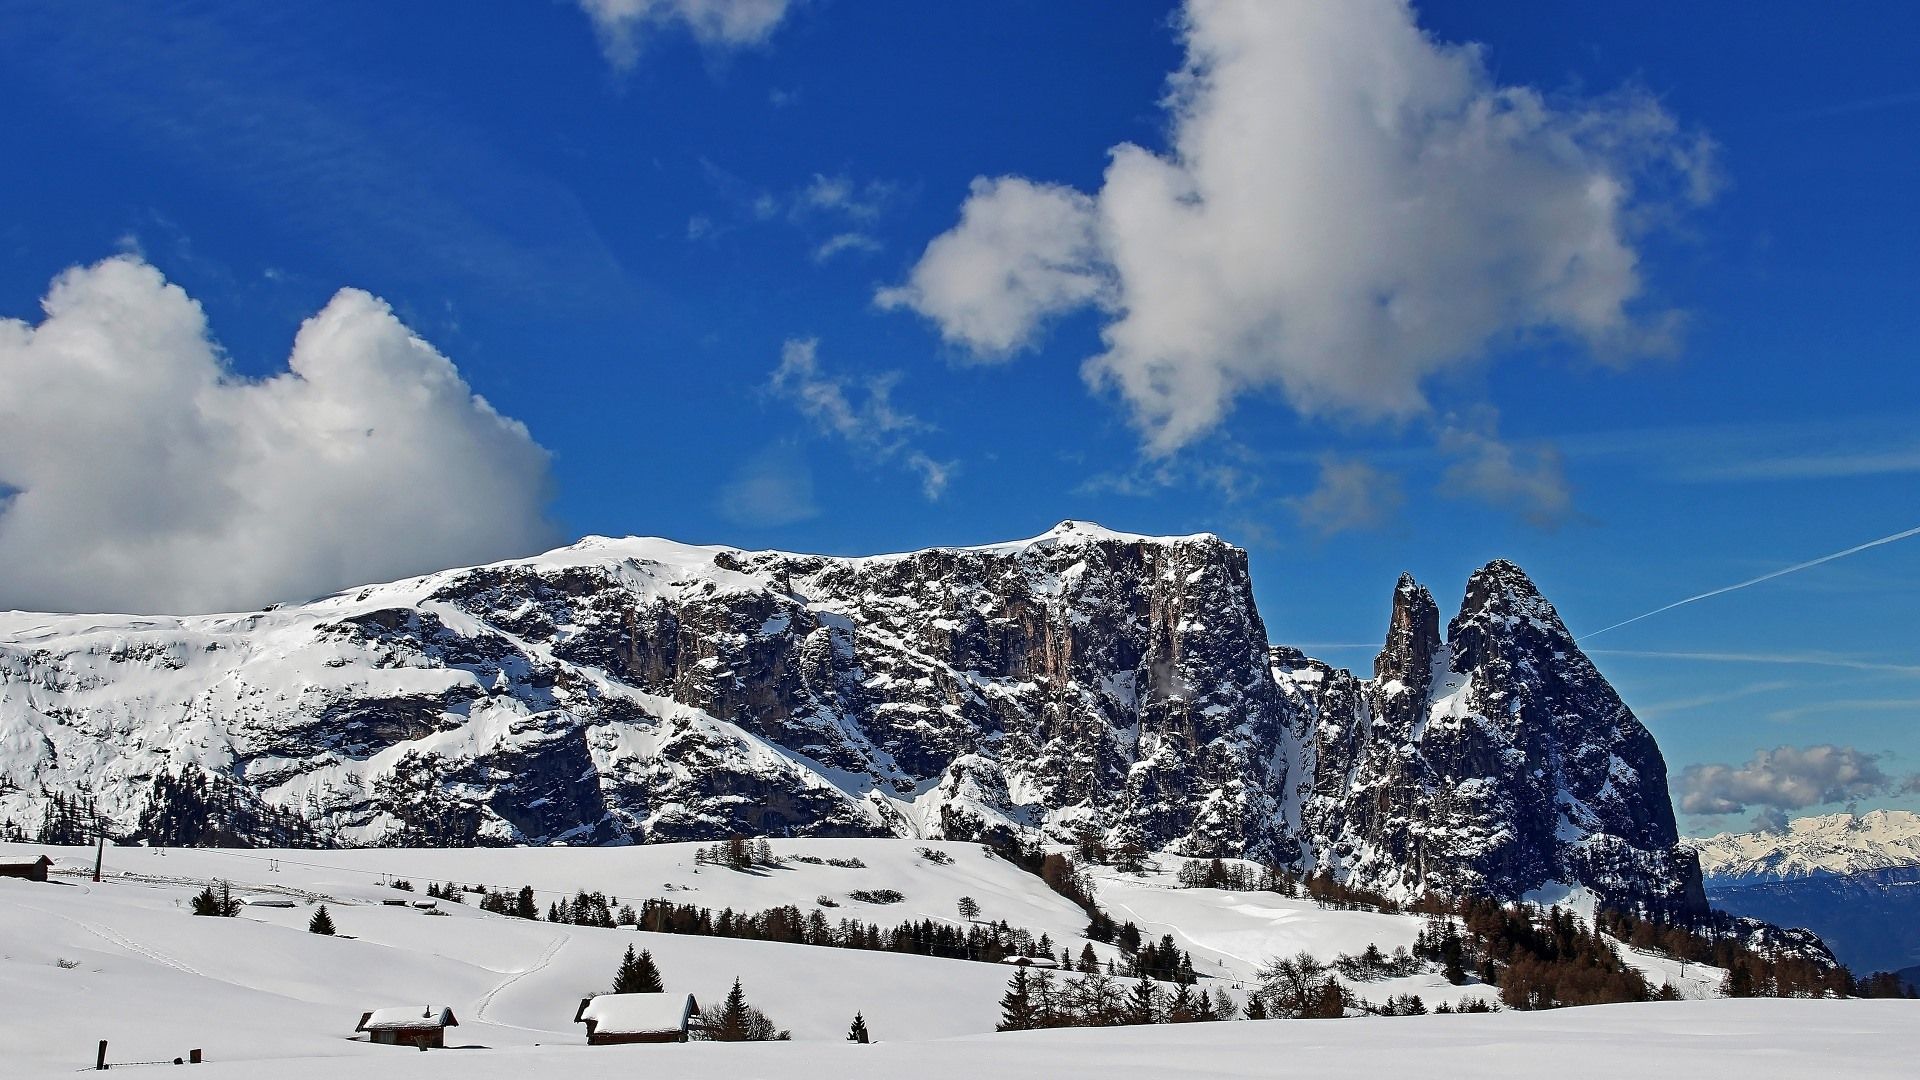  Alpen Hintergrundbild 1920x1080. Hintergrundbilder Winter Alpen Berge